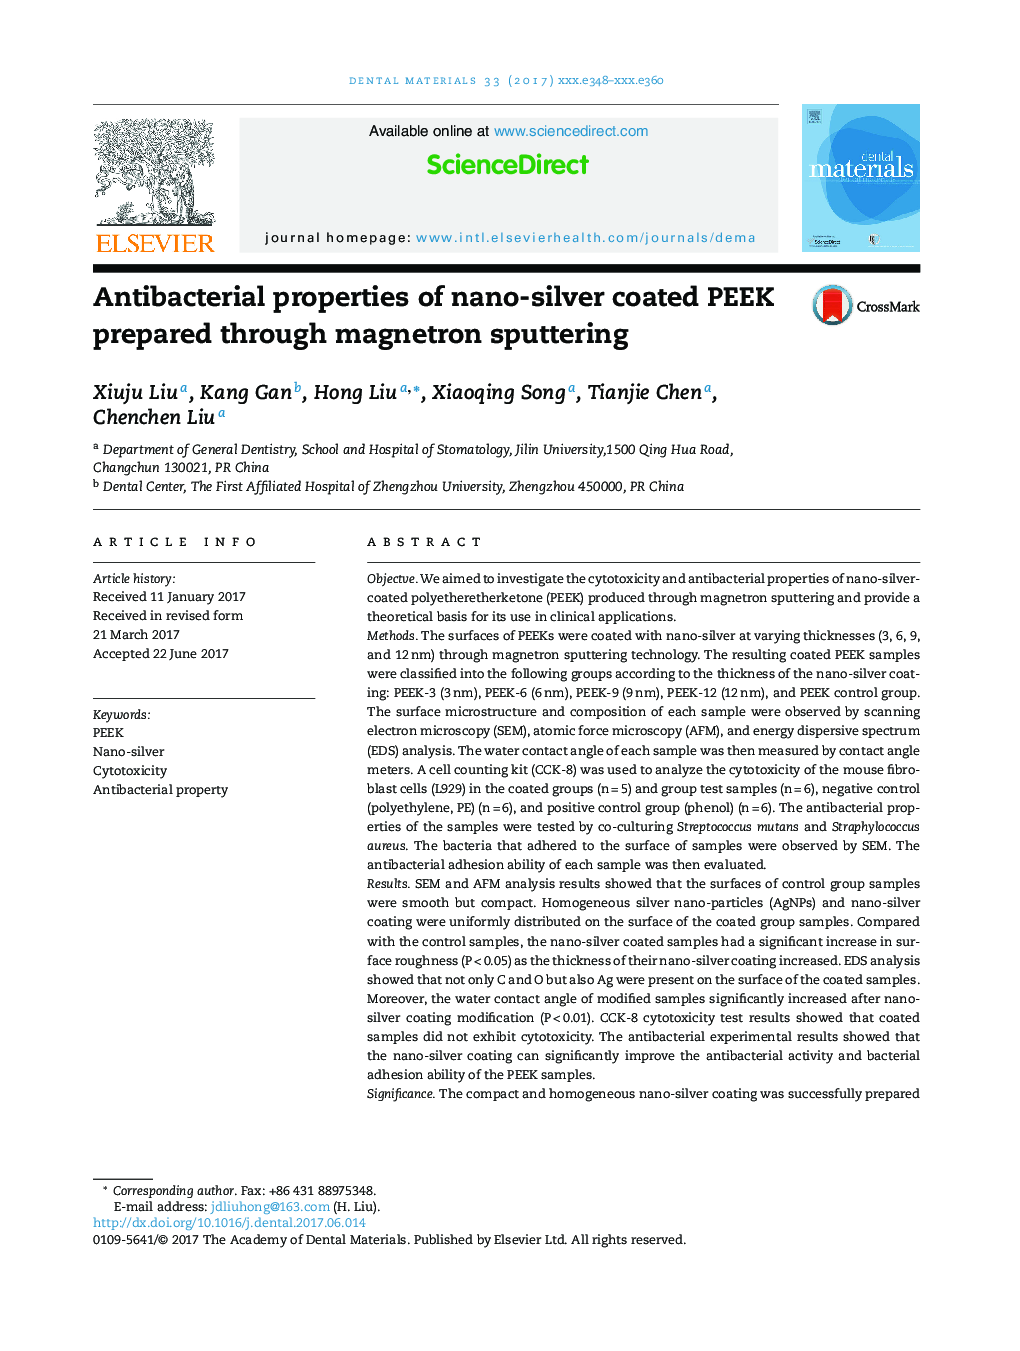 Antibacterial properties of nano-silver coated PEEK prepared through magnetron sputtering